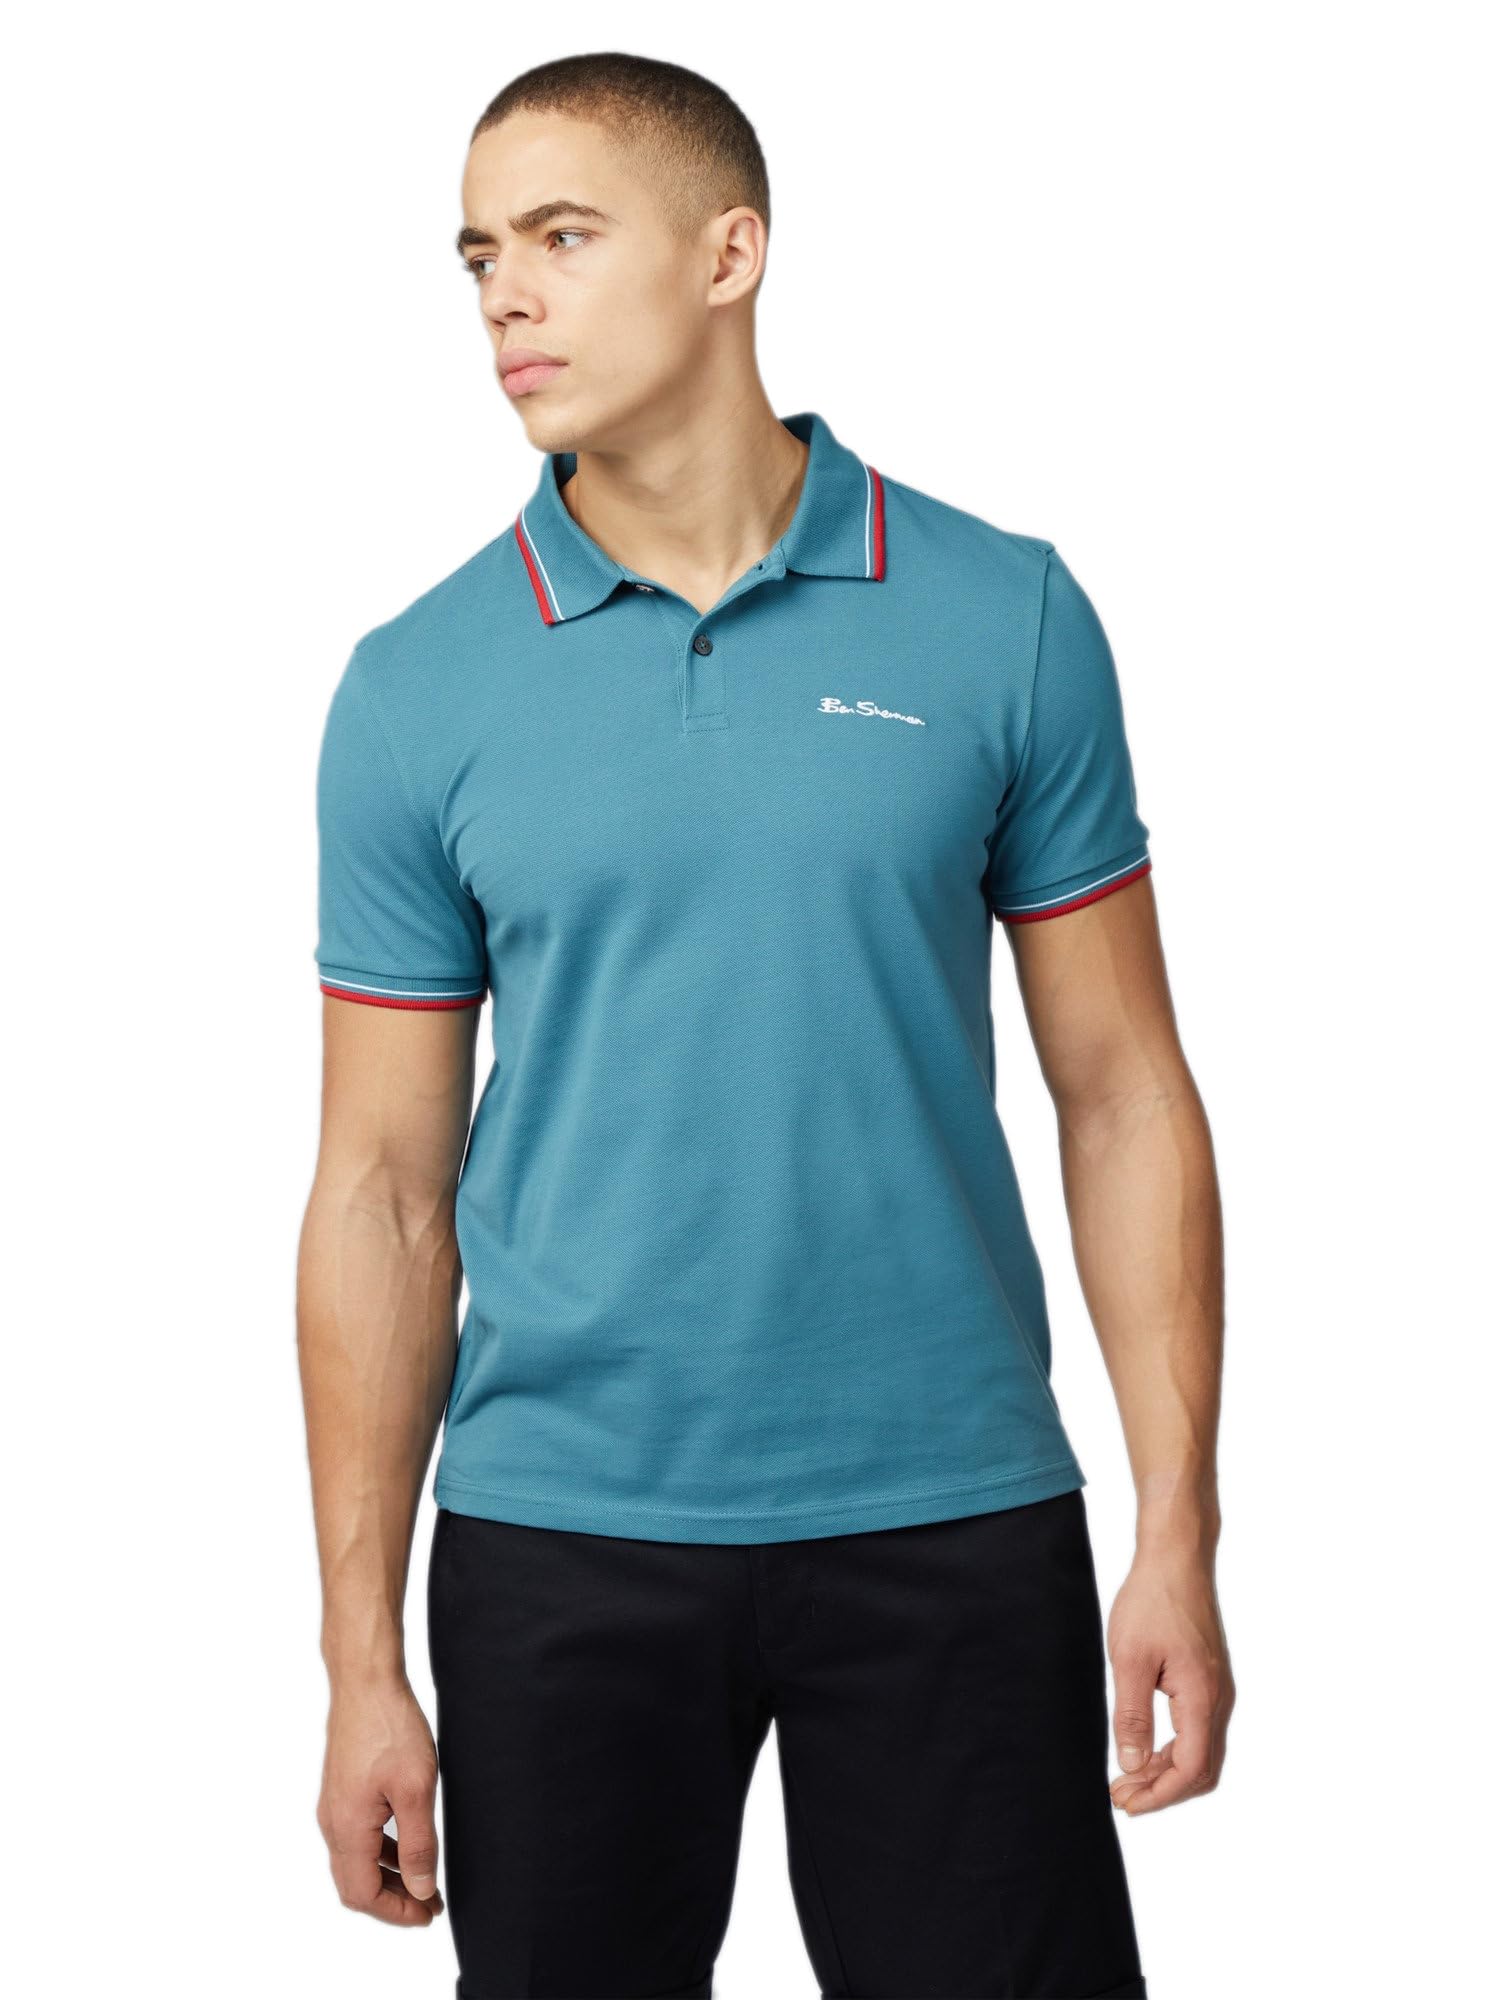 Ben Sherman Herren-Poloshirt, kurzärmelig, normale Passform, Blaugrün 2, XL